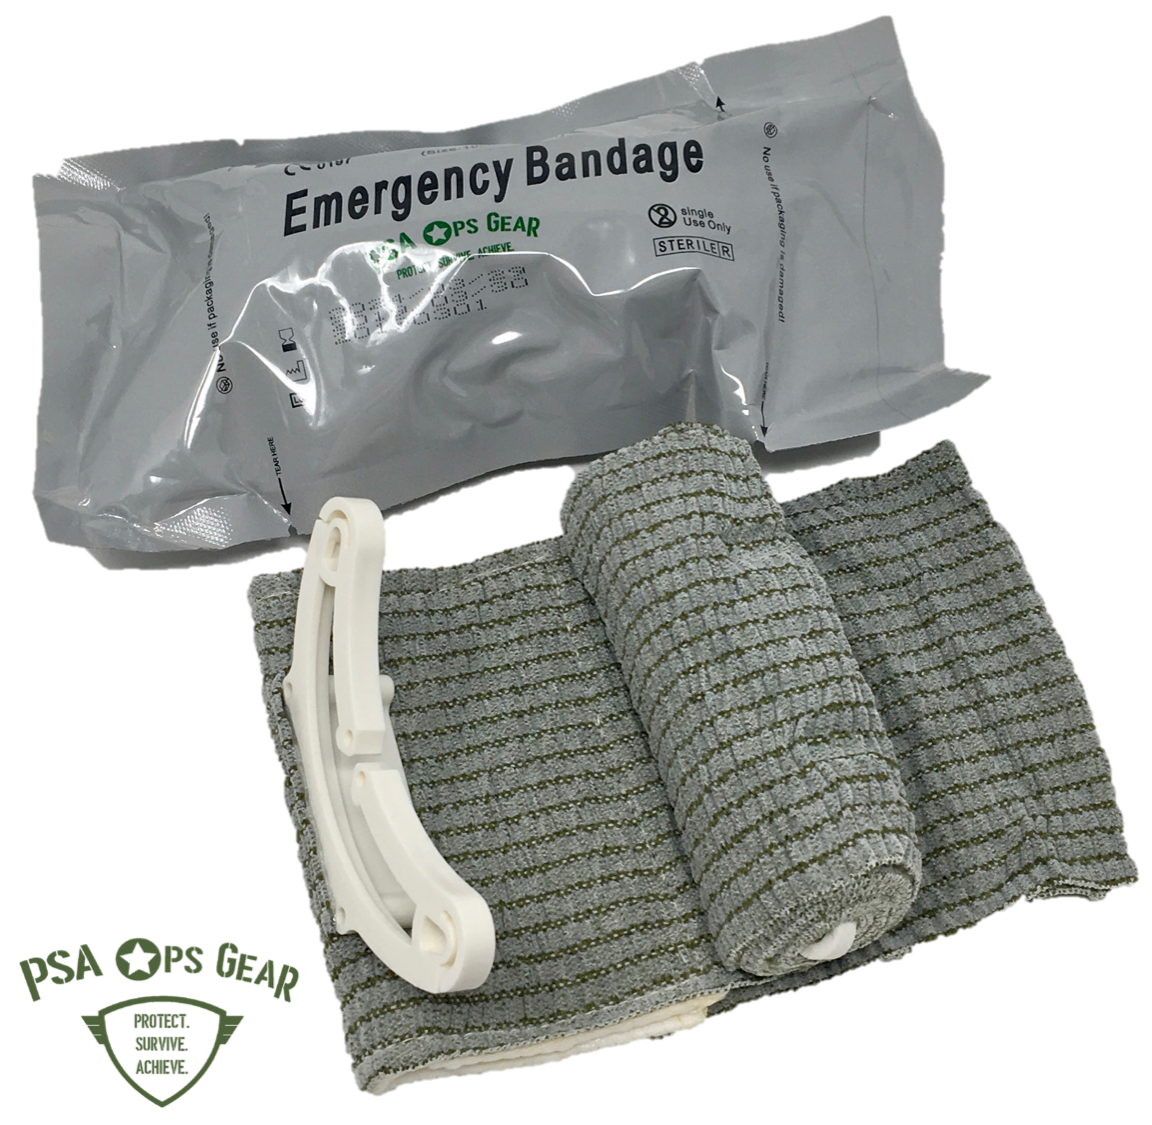 Hemorrhage Trauma Pack with Chest Seal + Combat Emergency Bandage + AllaQuix® Stop Bleeding Gauze - AllaQuix™ - Stop Bleeding Quick Like the Pros!